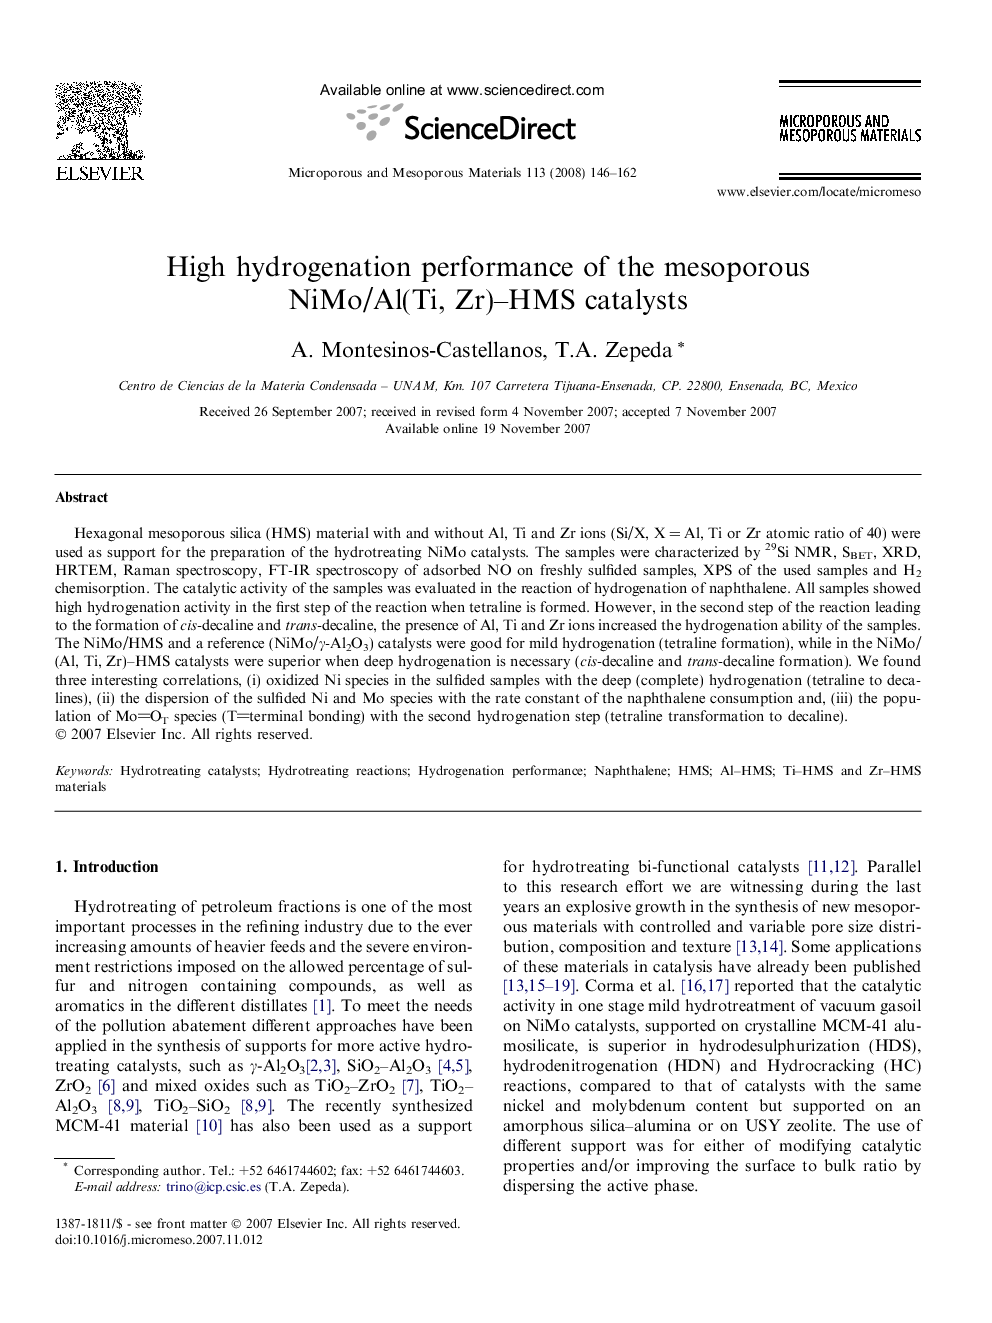 High hydrogenation performance of the mesoporous NiMo/Al(Ti, Zr)–HMS catalysts